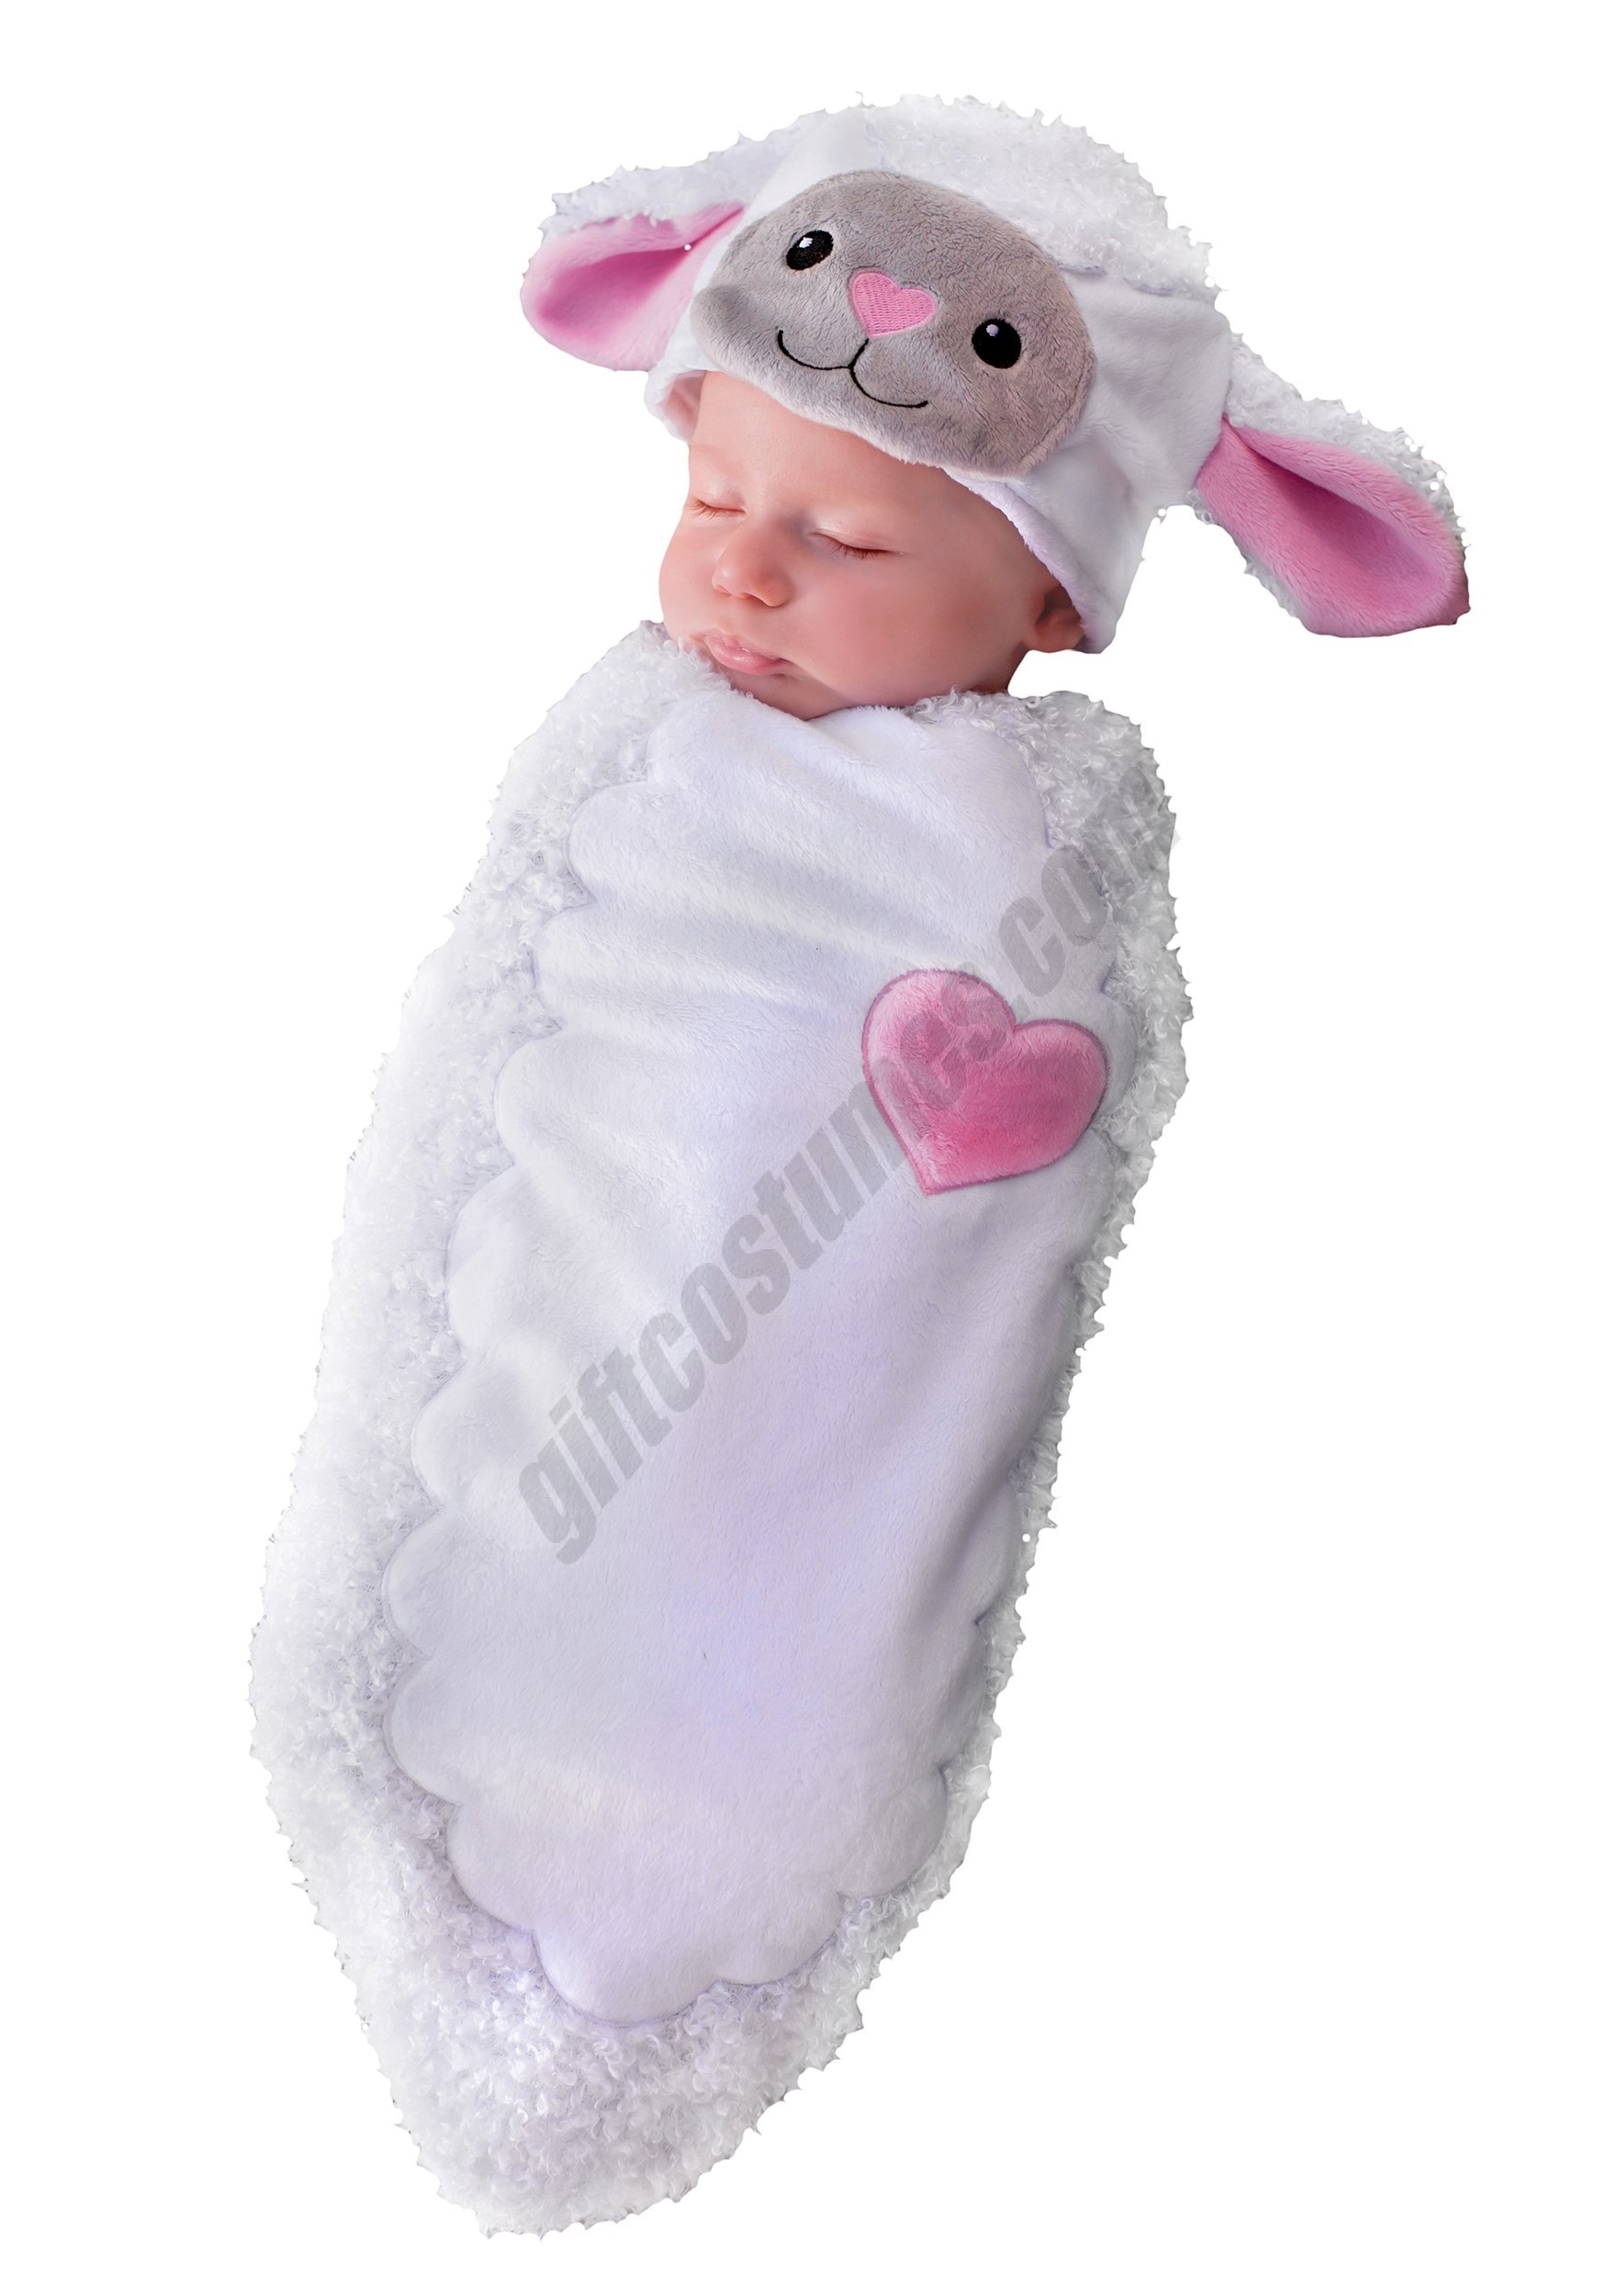 infant Rylan the Lamb Bundington Costume Promotions - infant Rylan the Lamb Bundington Costume Promotions